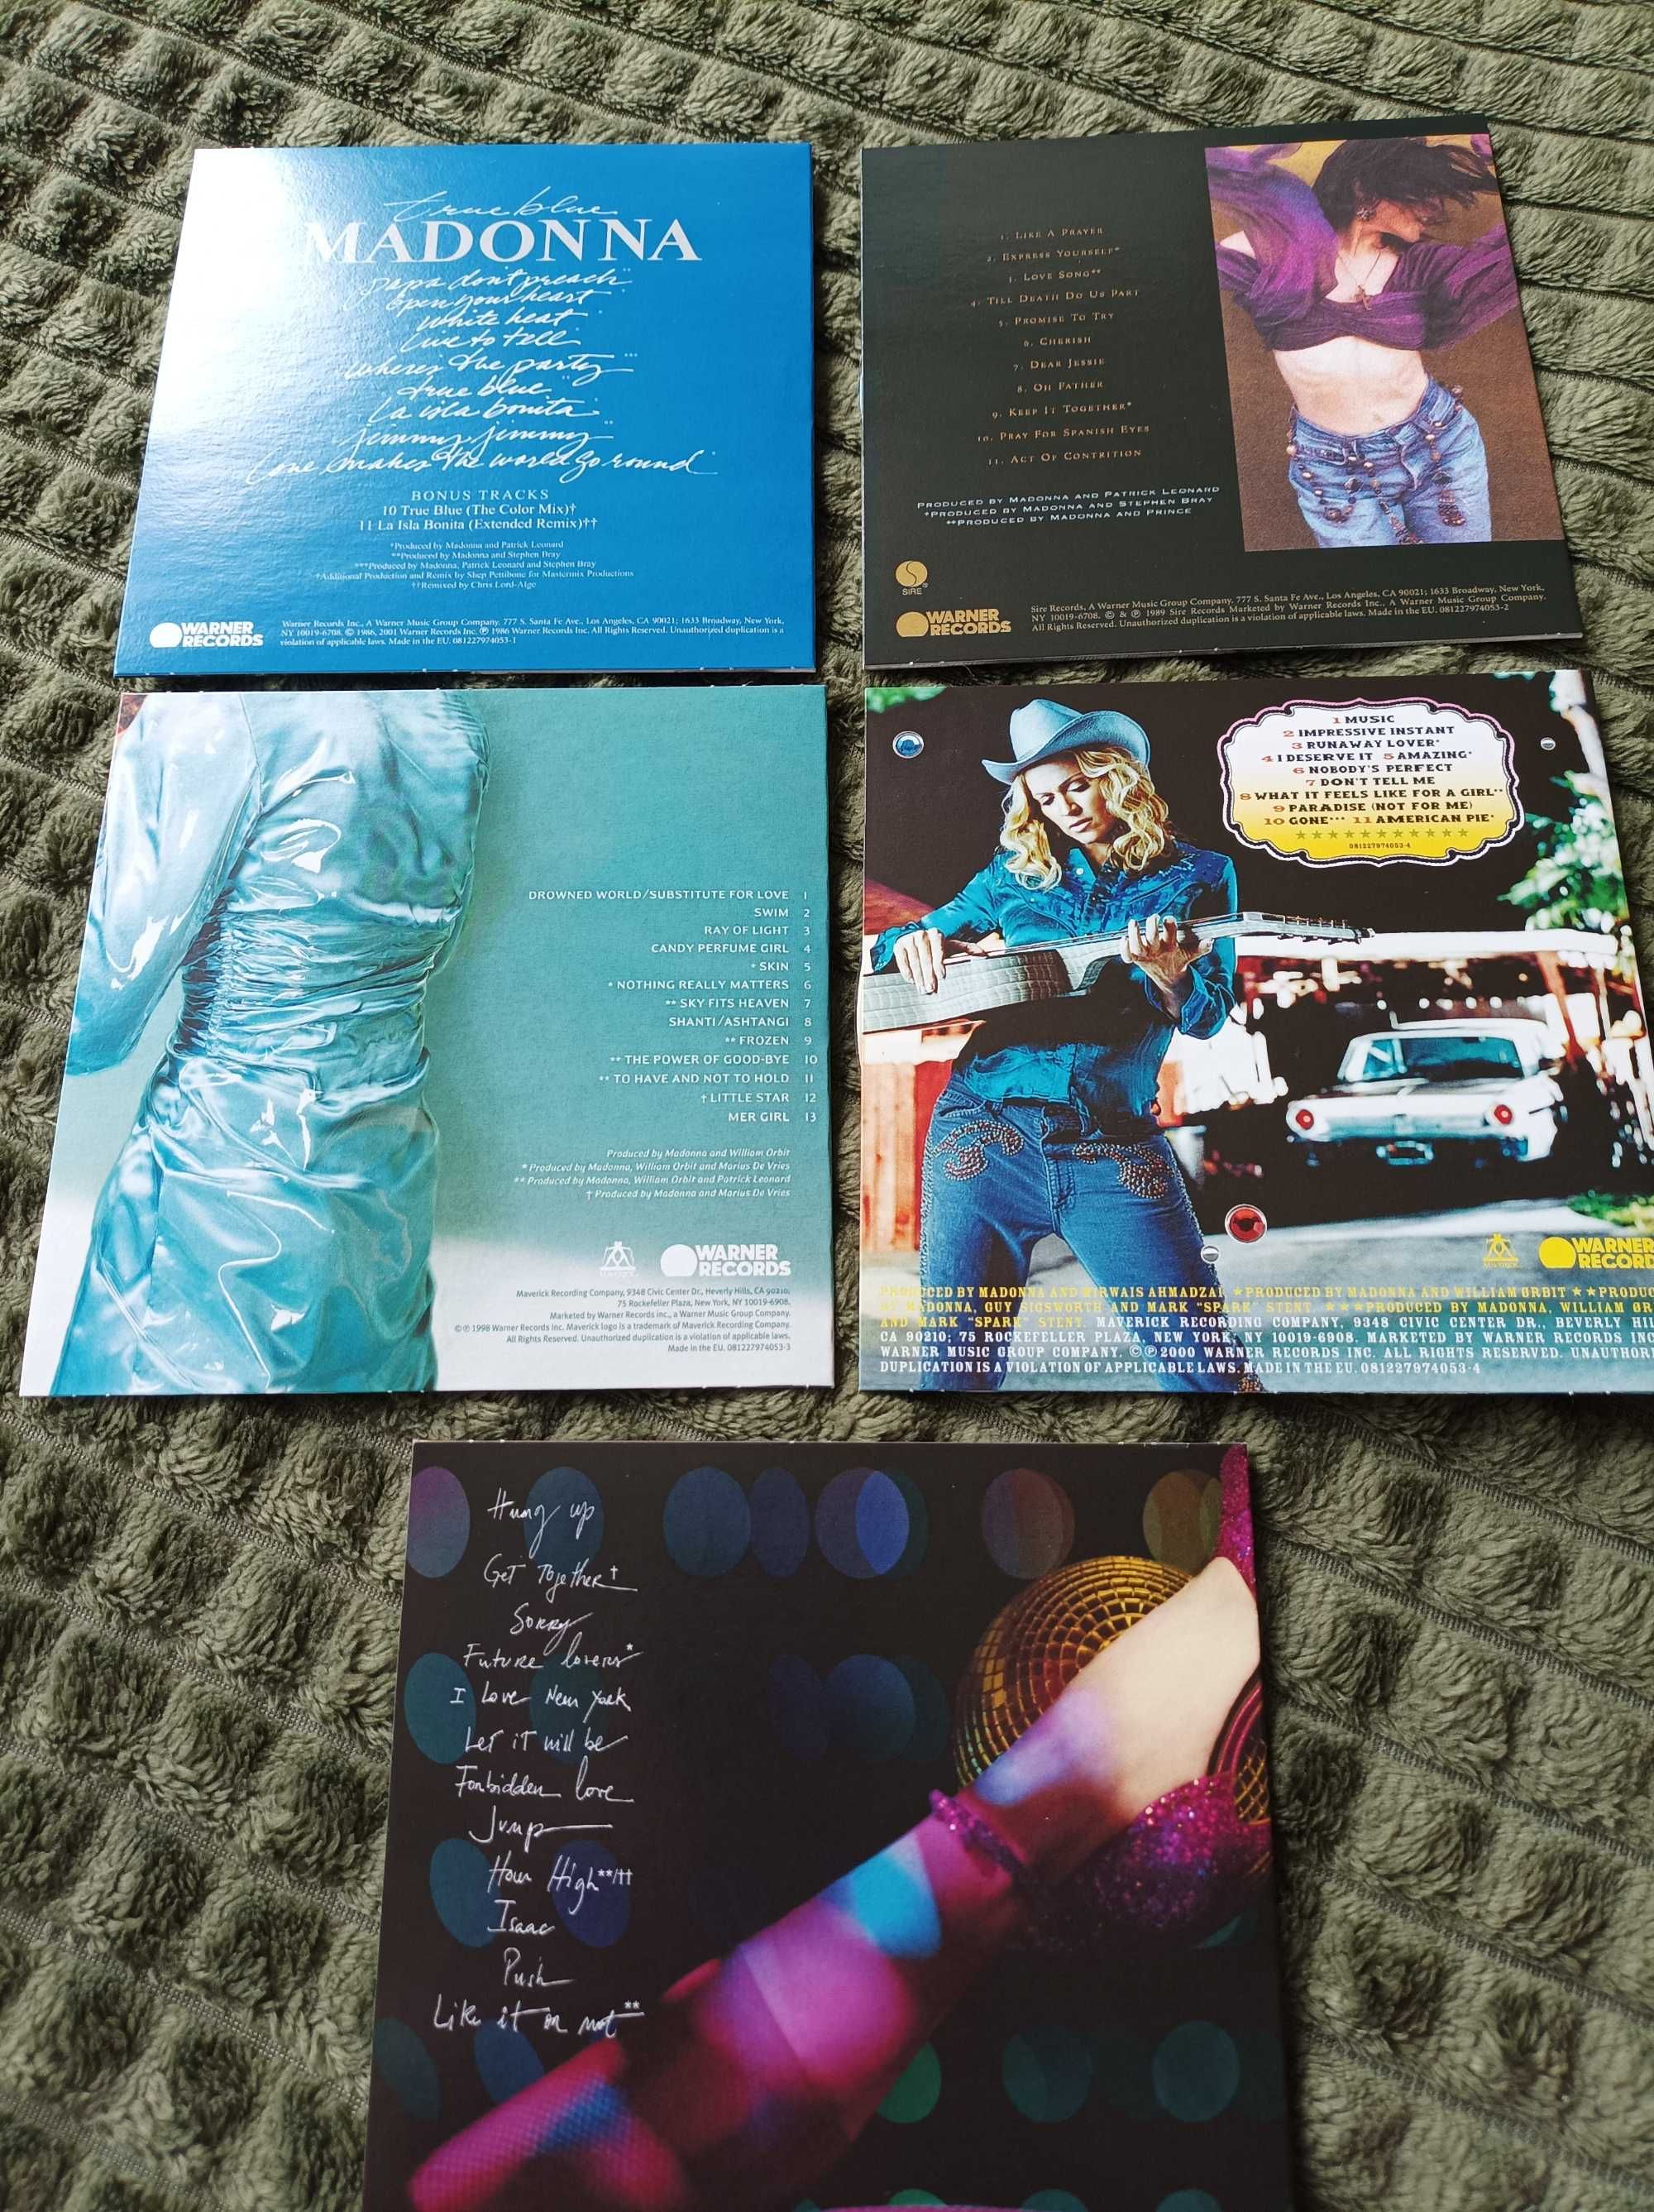 Madonna Original album series 5 CD